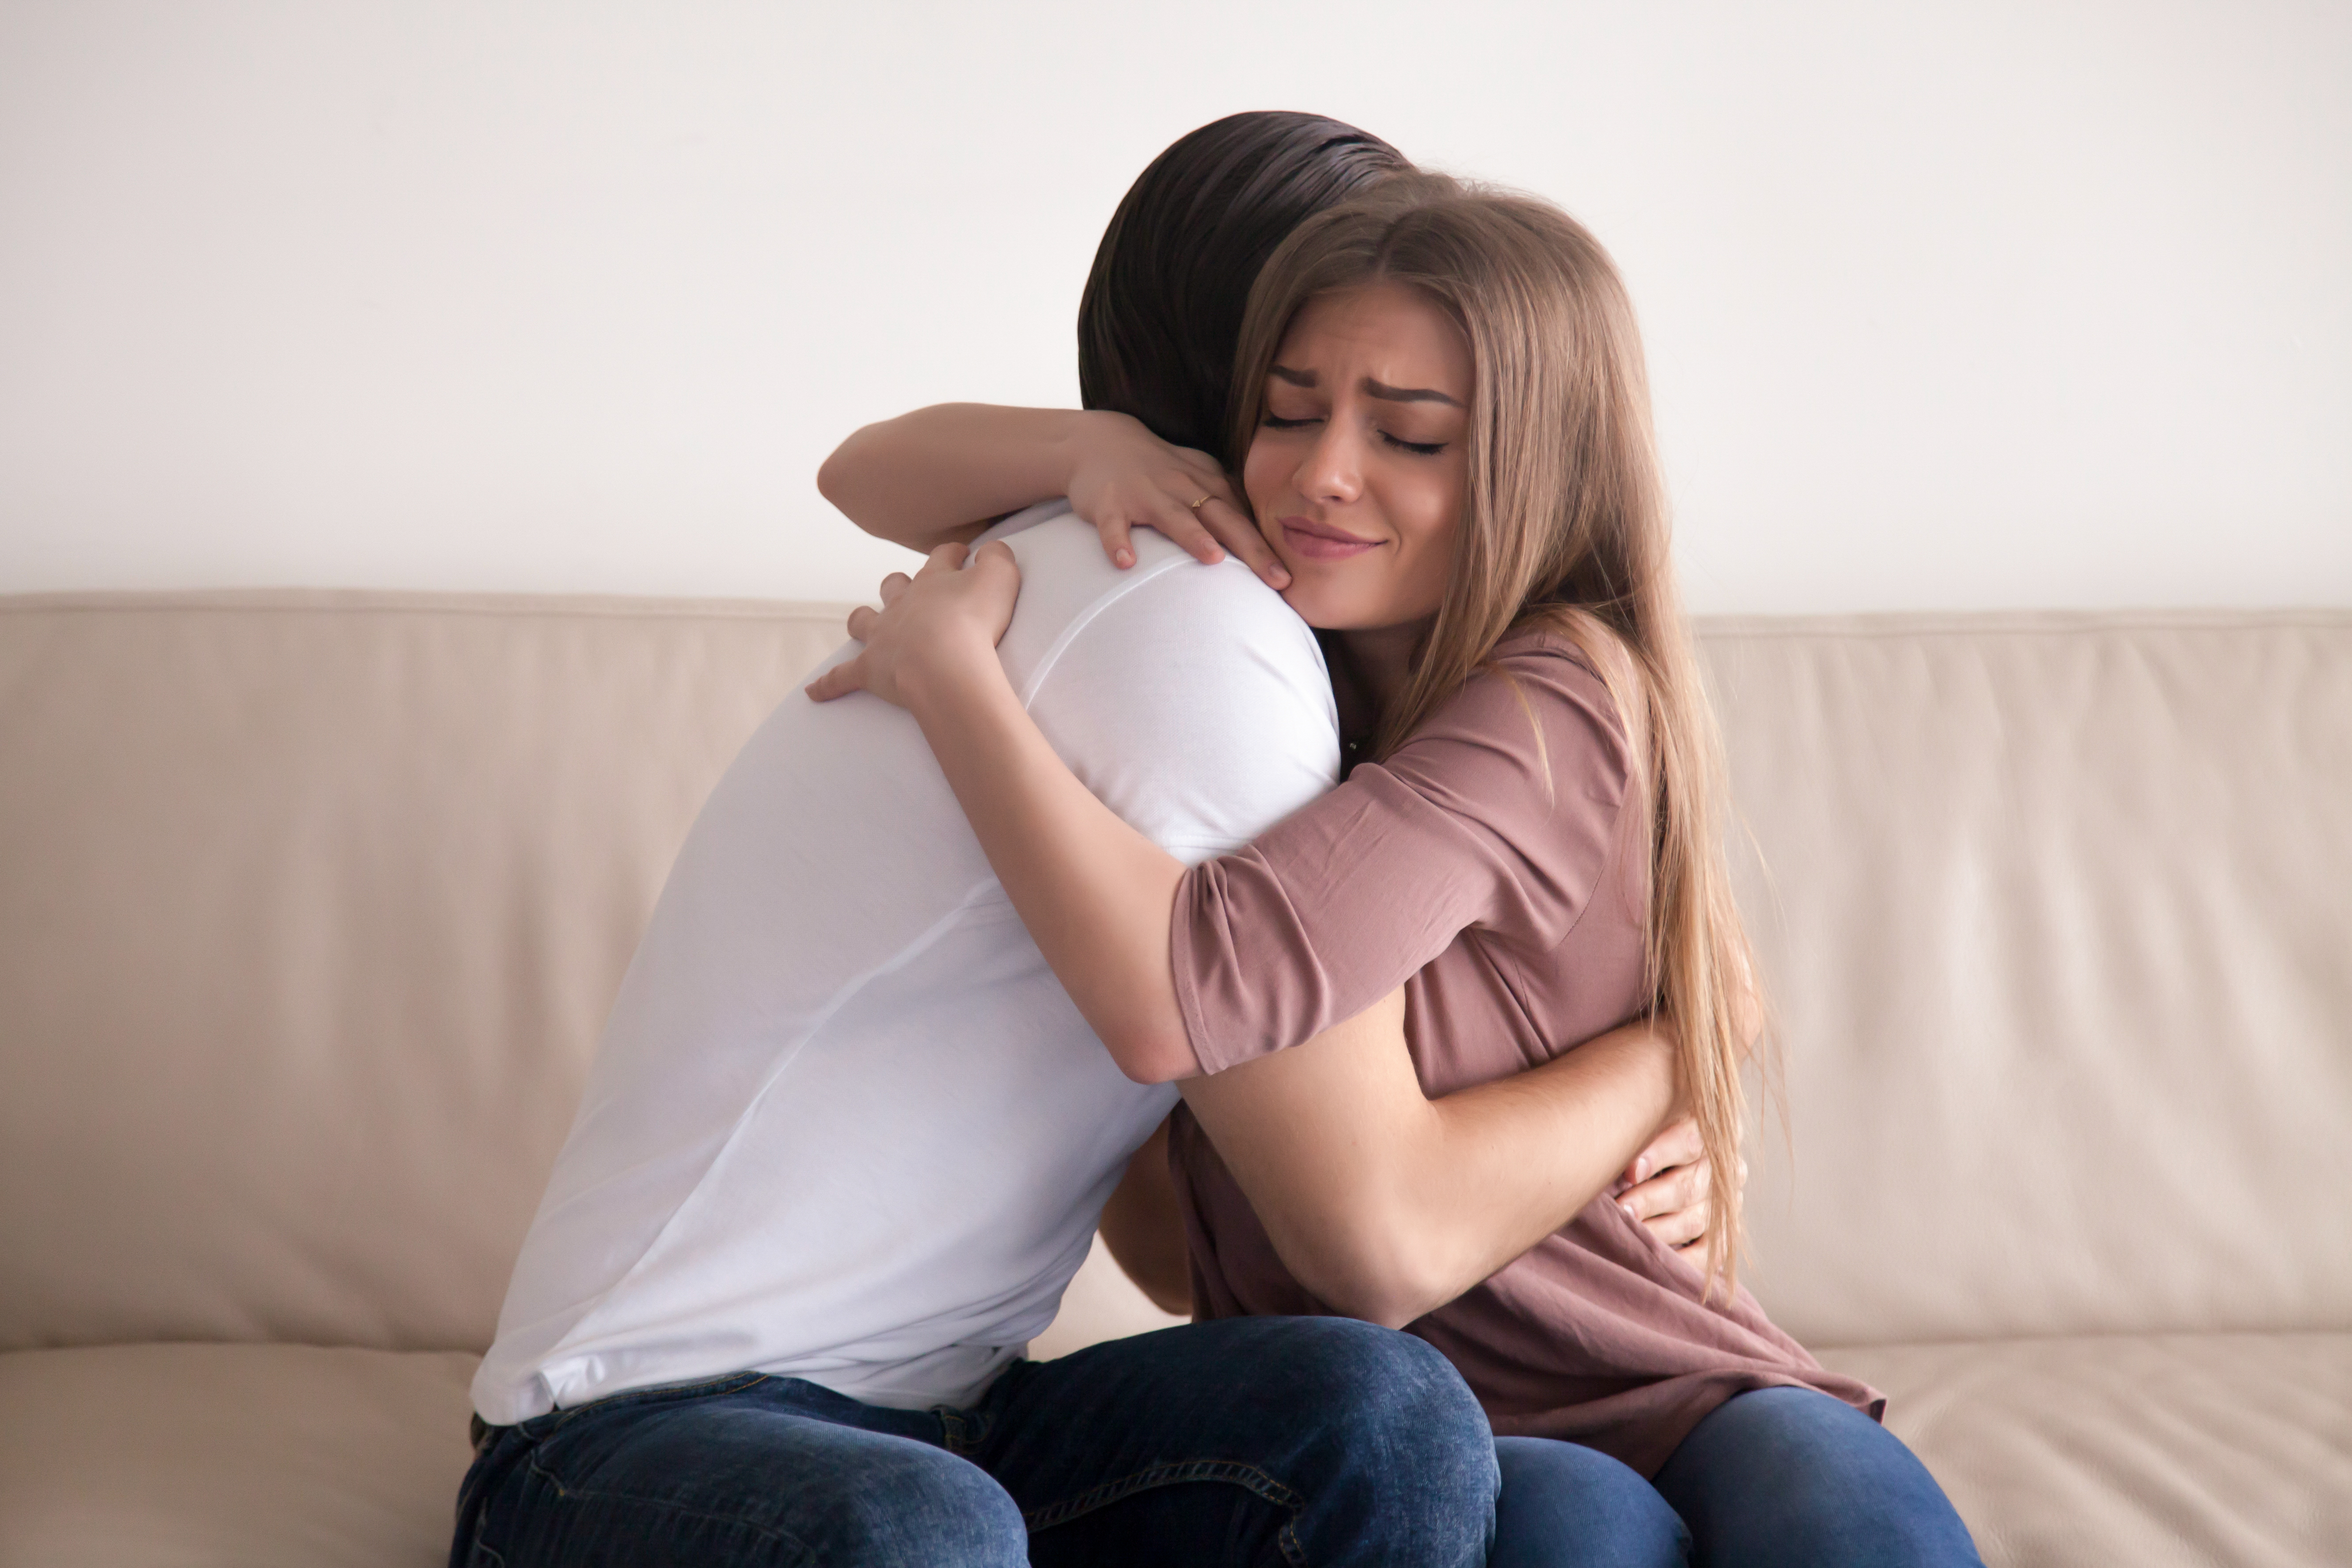 Man hugs his girlfriend | Source: Shutterstock